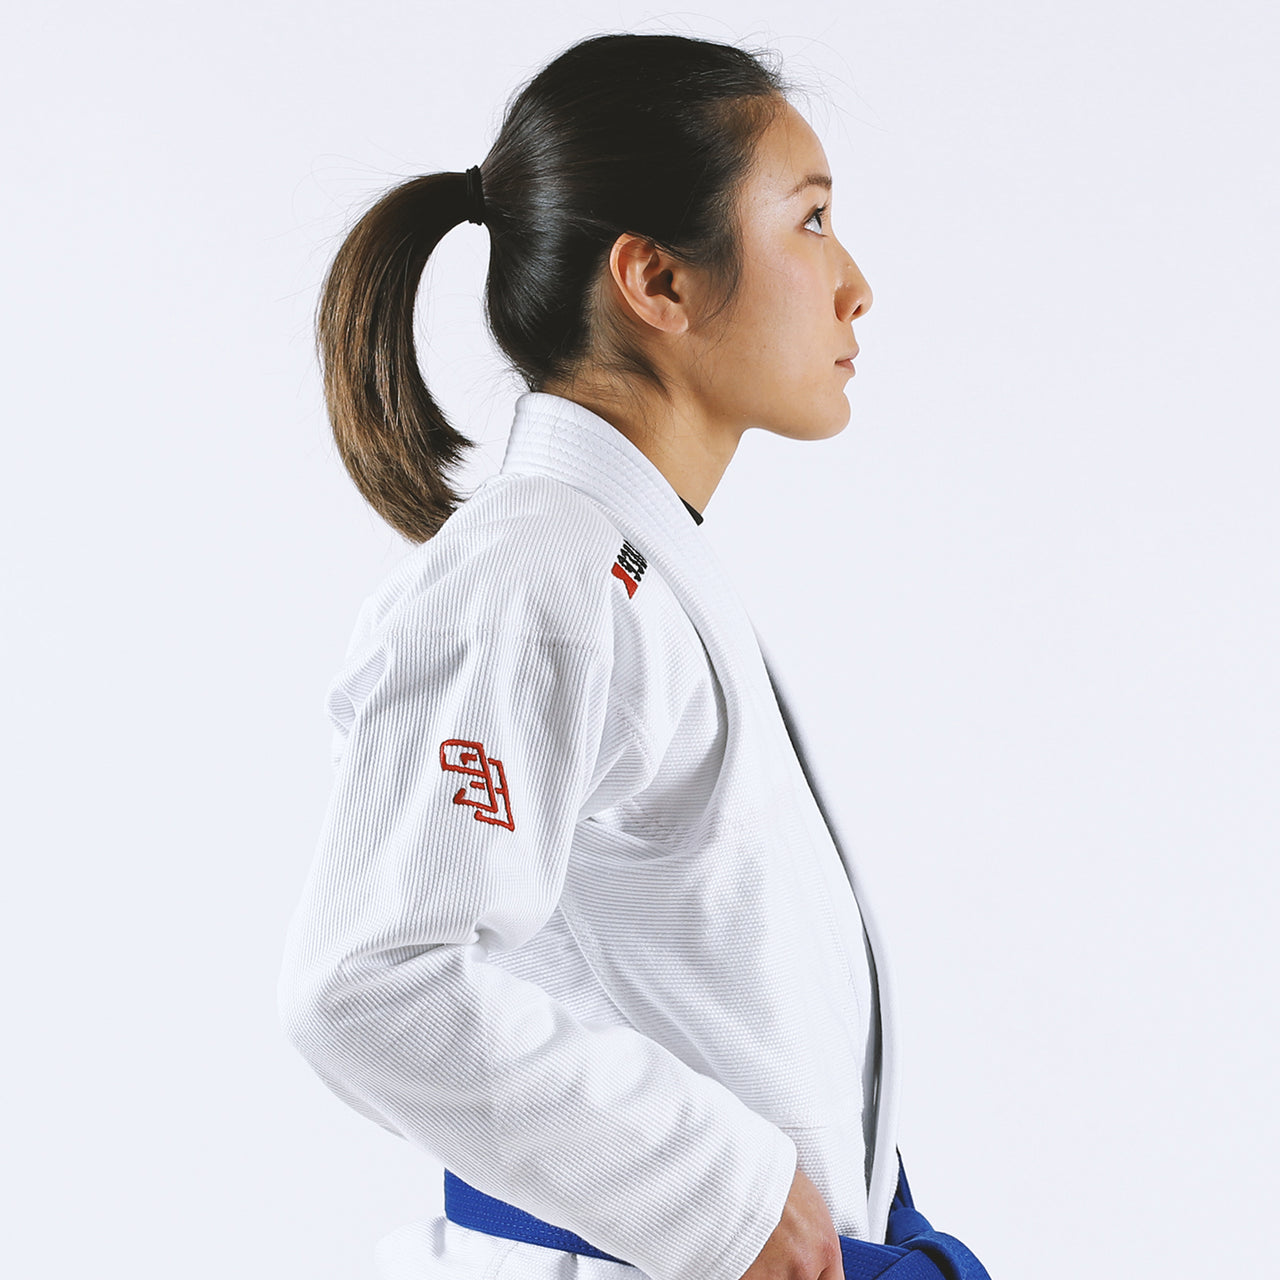 93brand "Goose Feather" Lightweight Women's Jiu Jitsu Gi